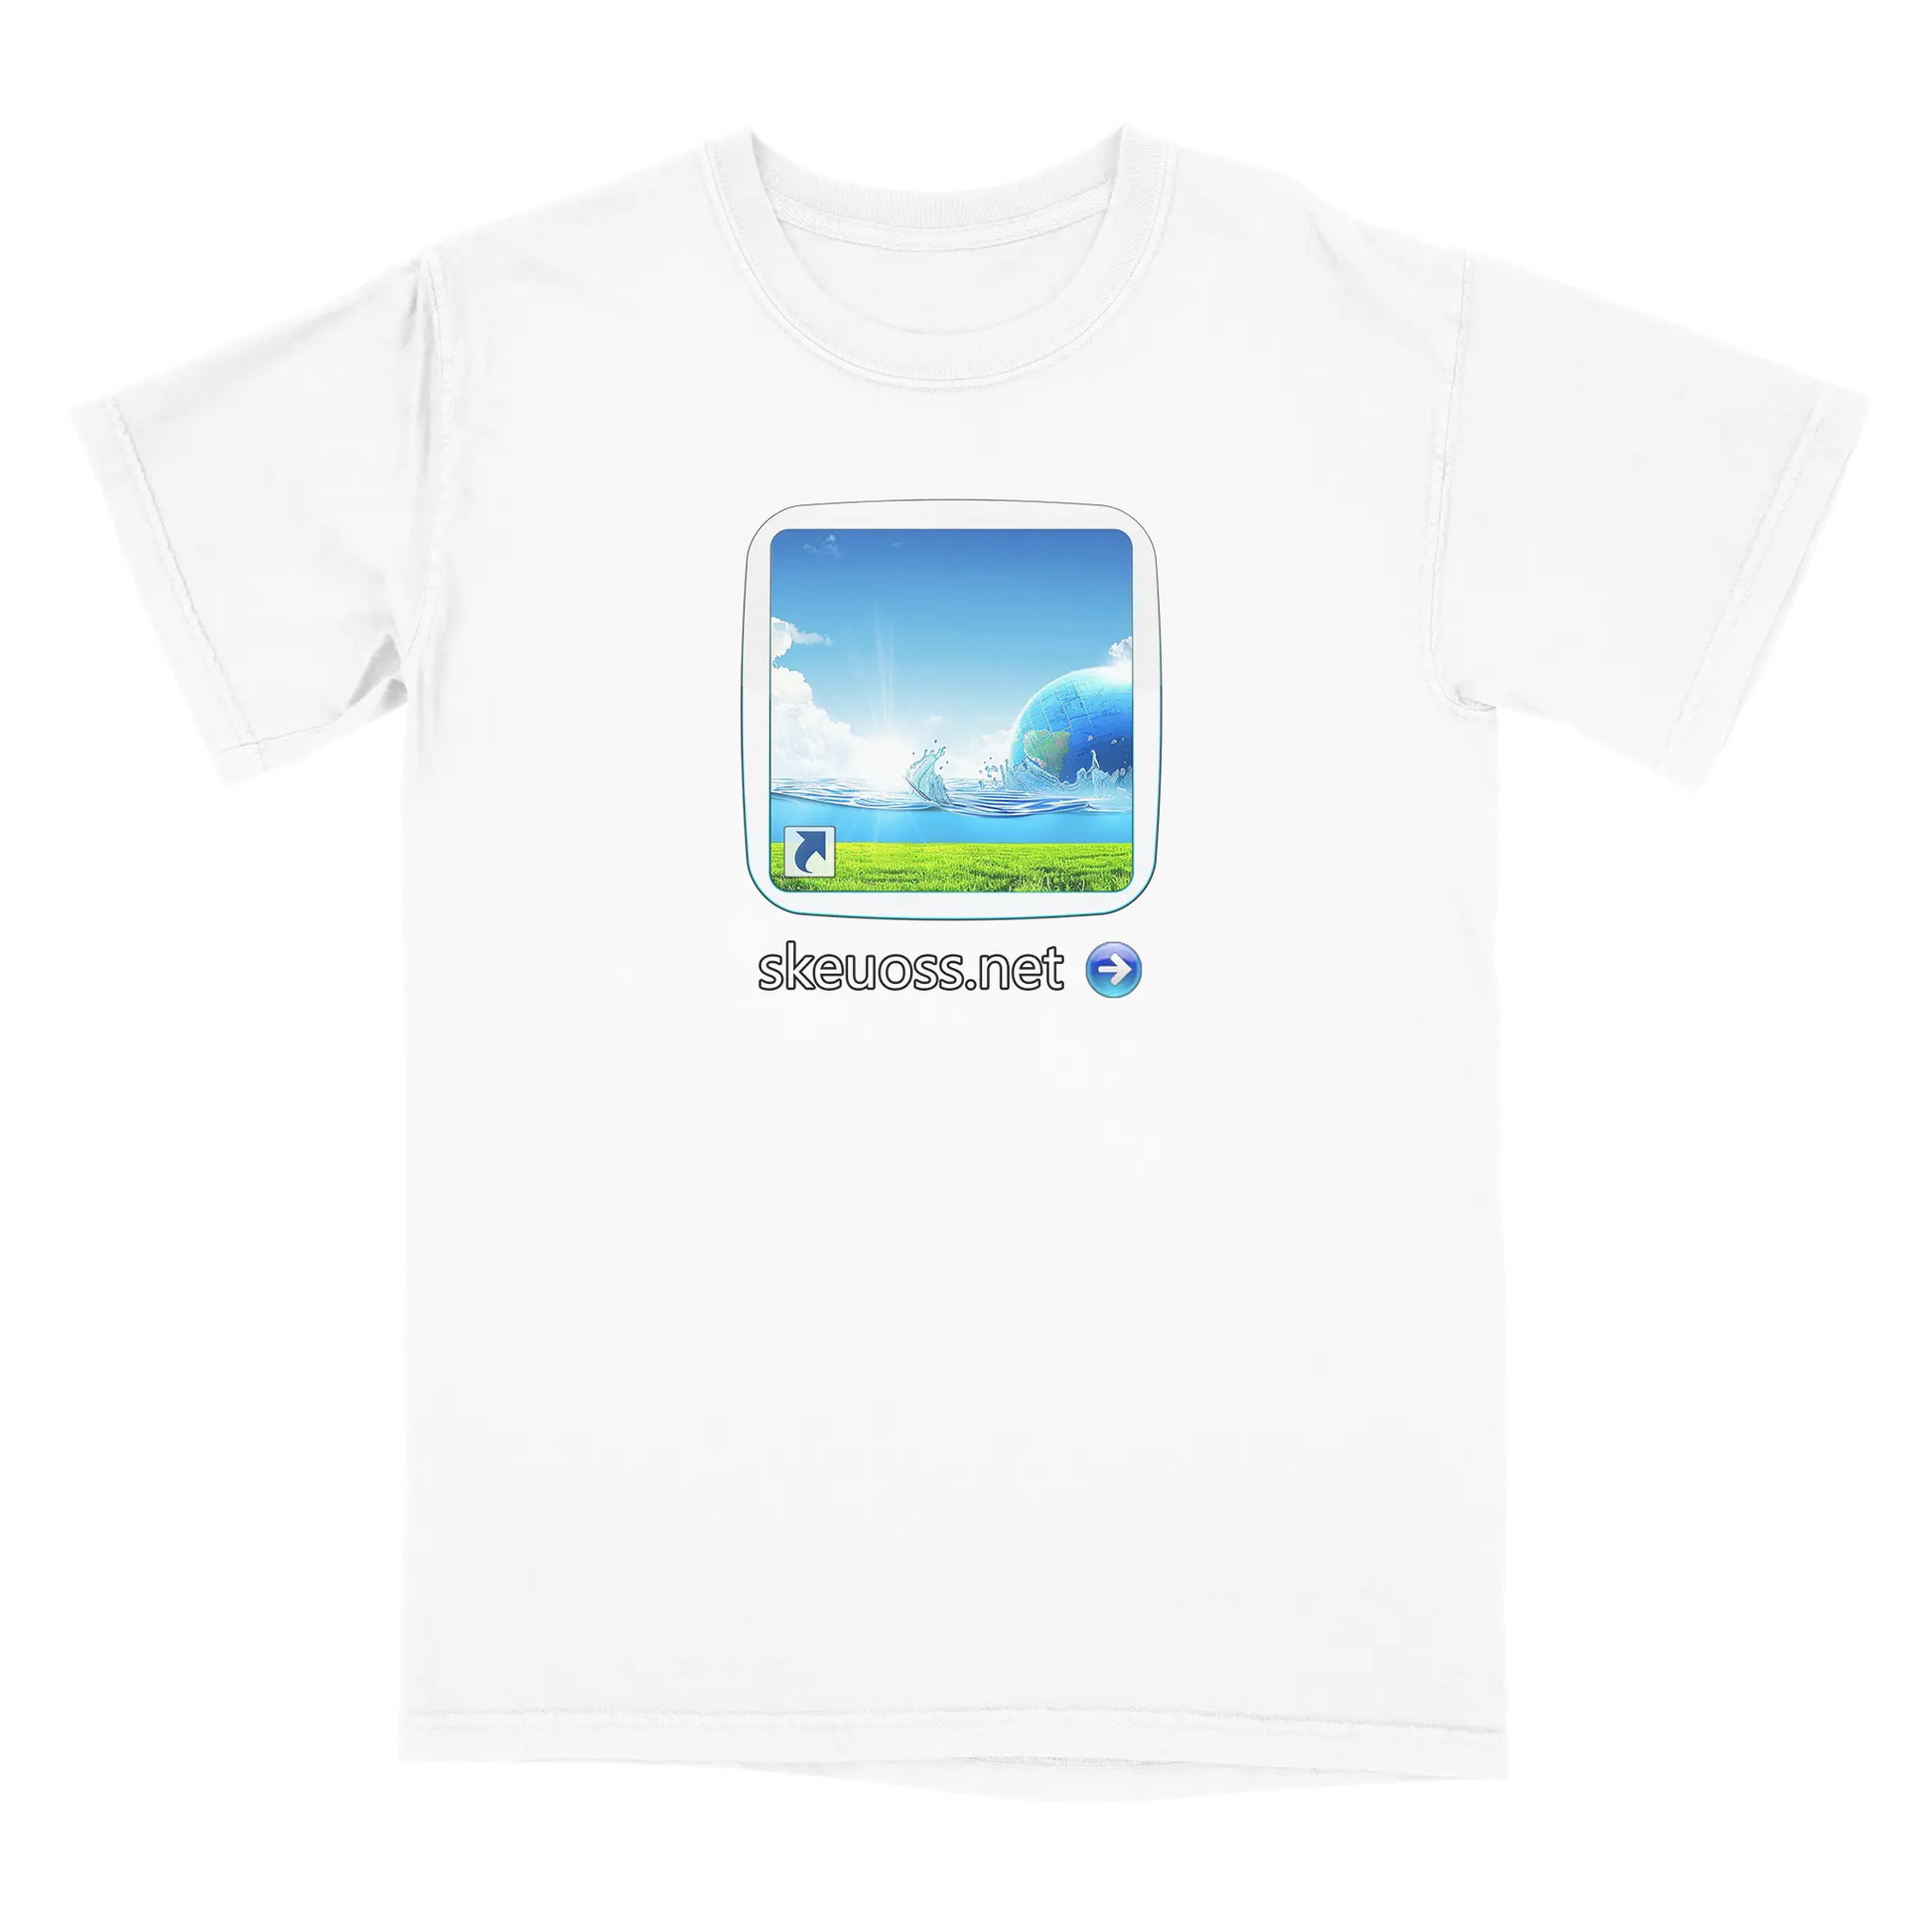 Frutiger Aero T-shirt - User Login Collection - User 312